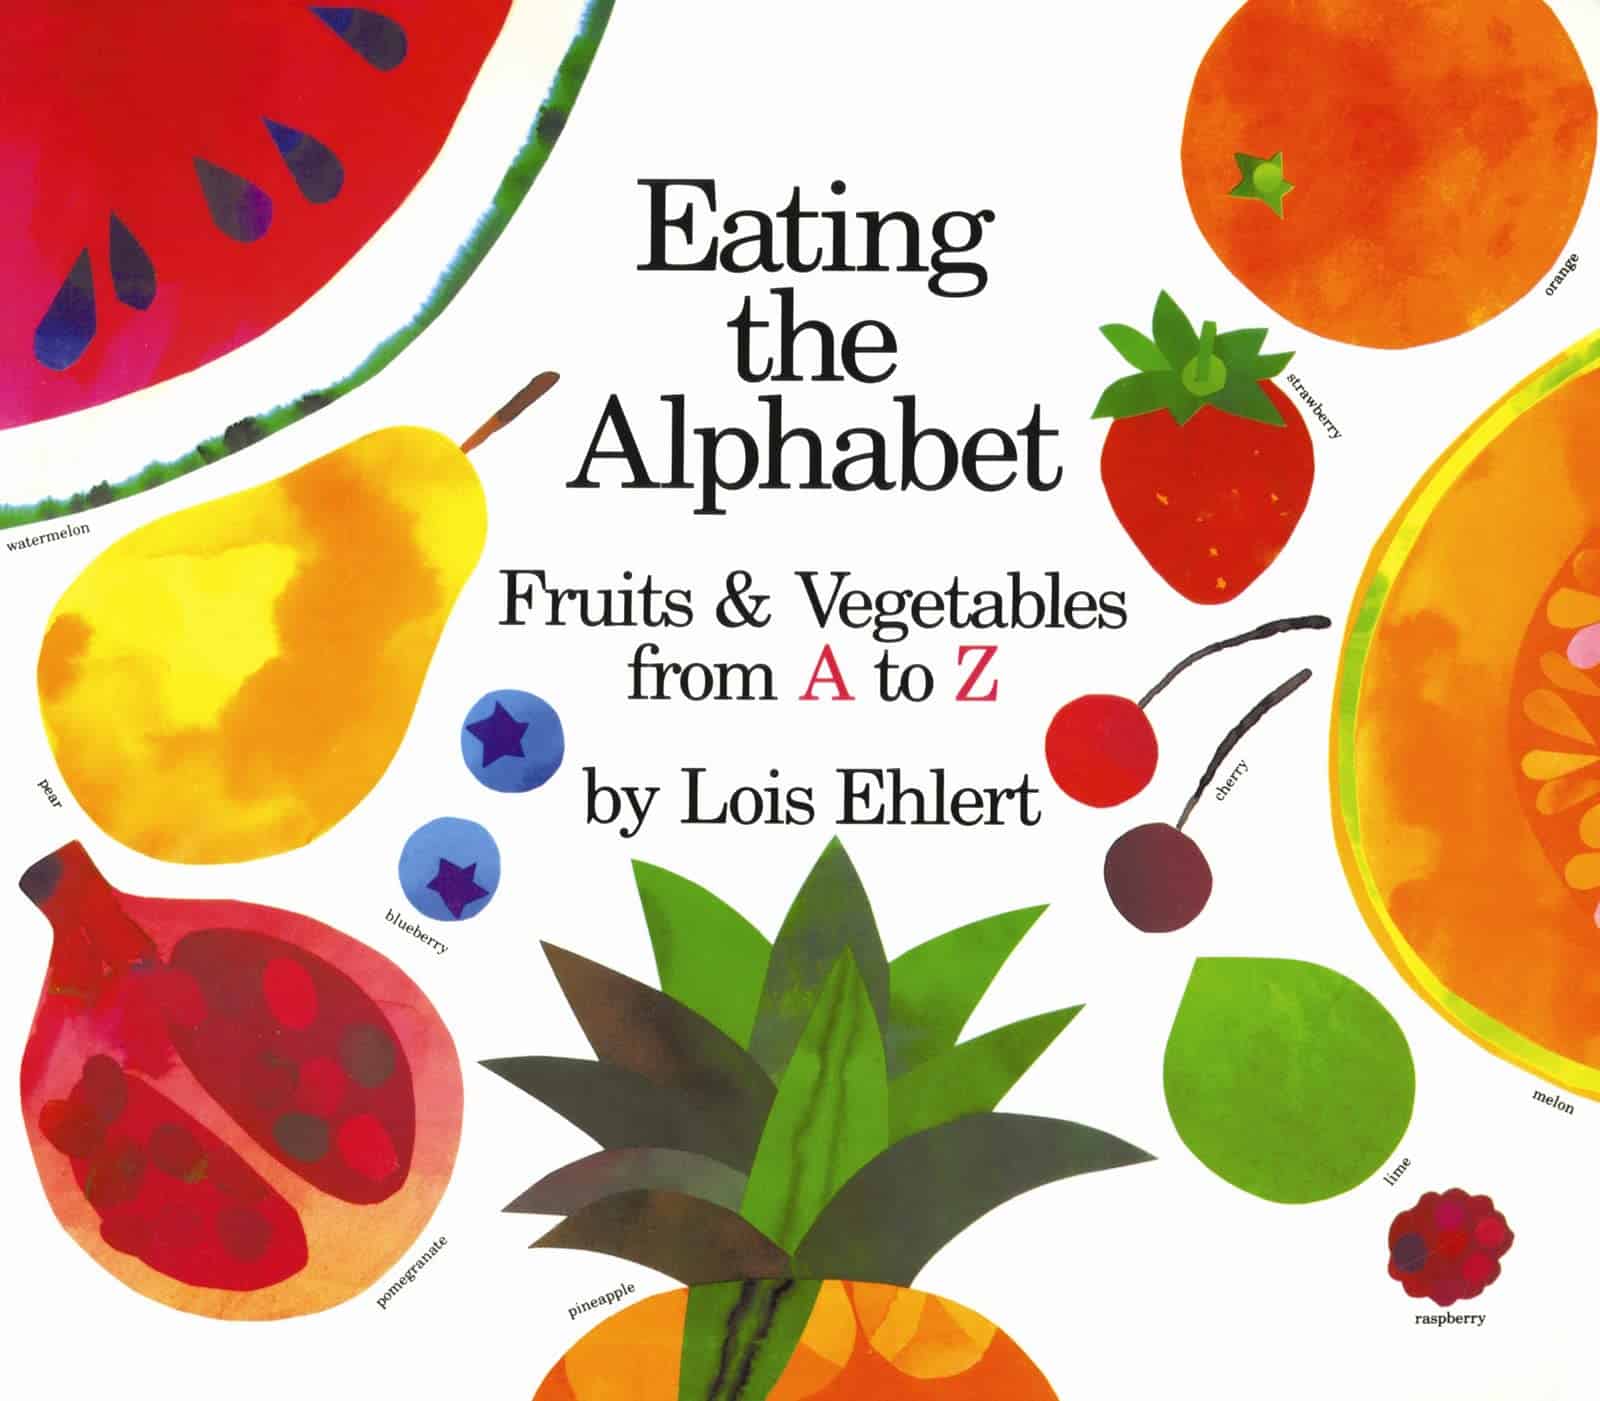 "Eating the Alphabet" by Lois Ehlert